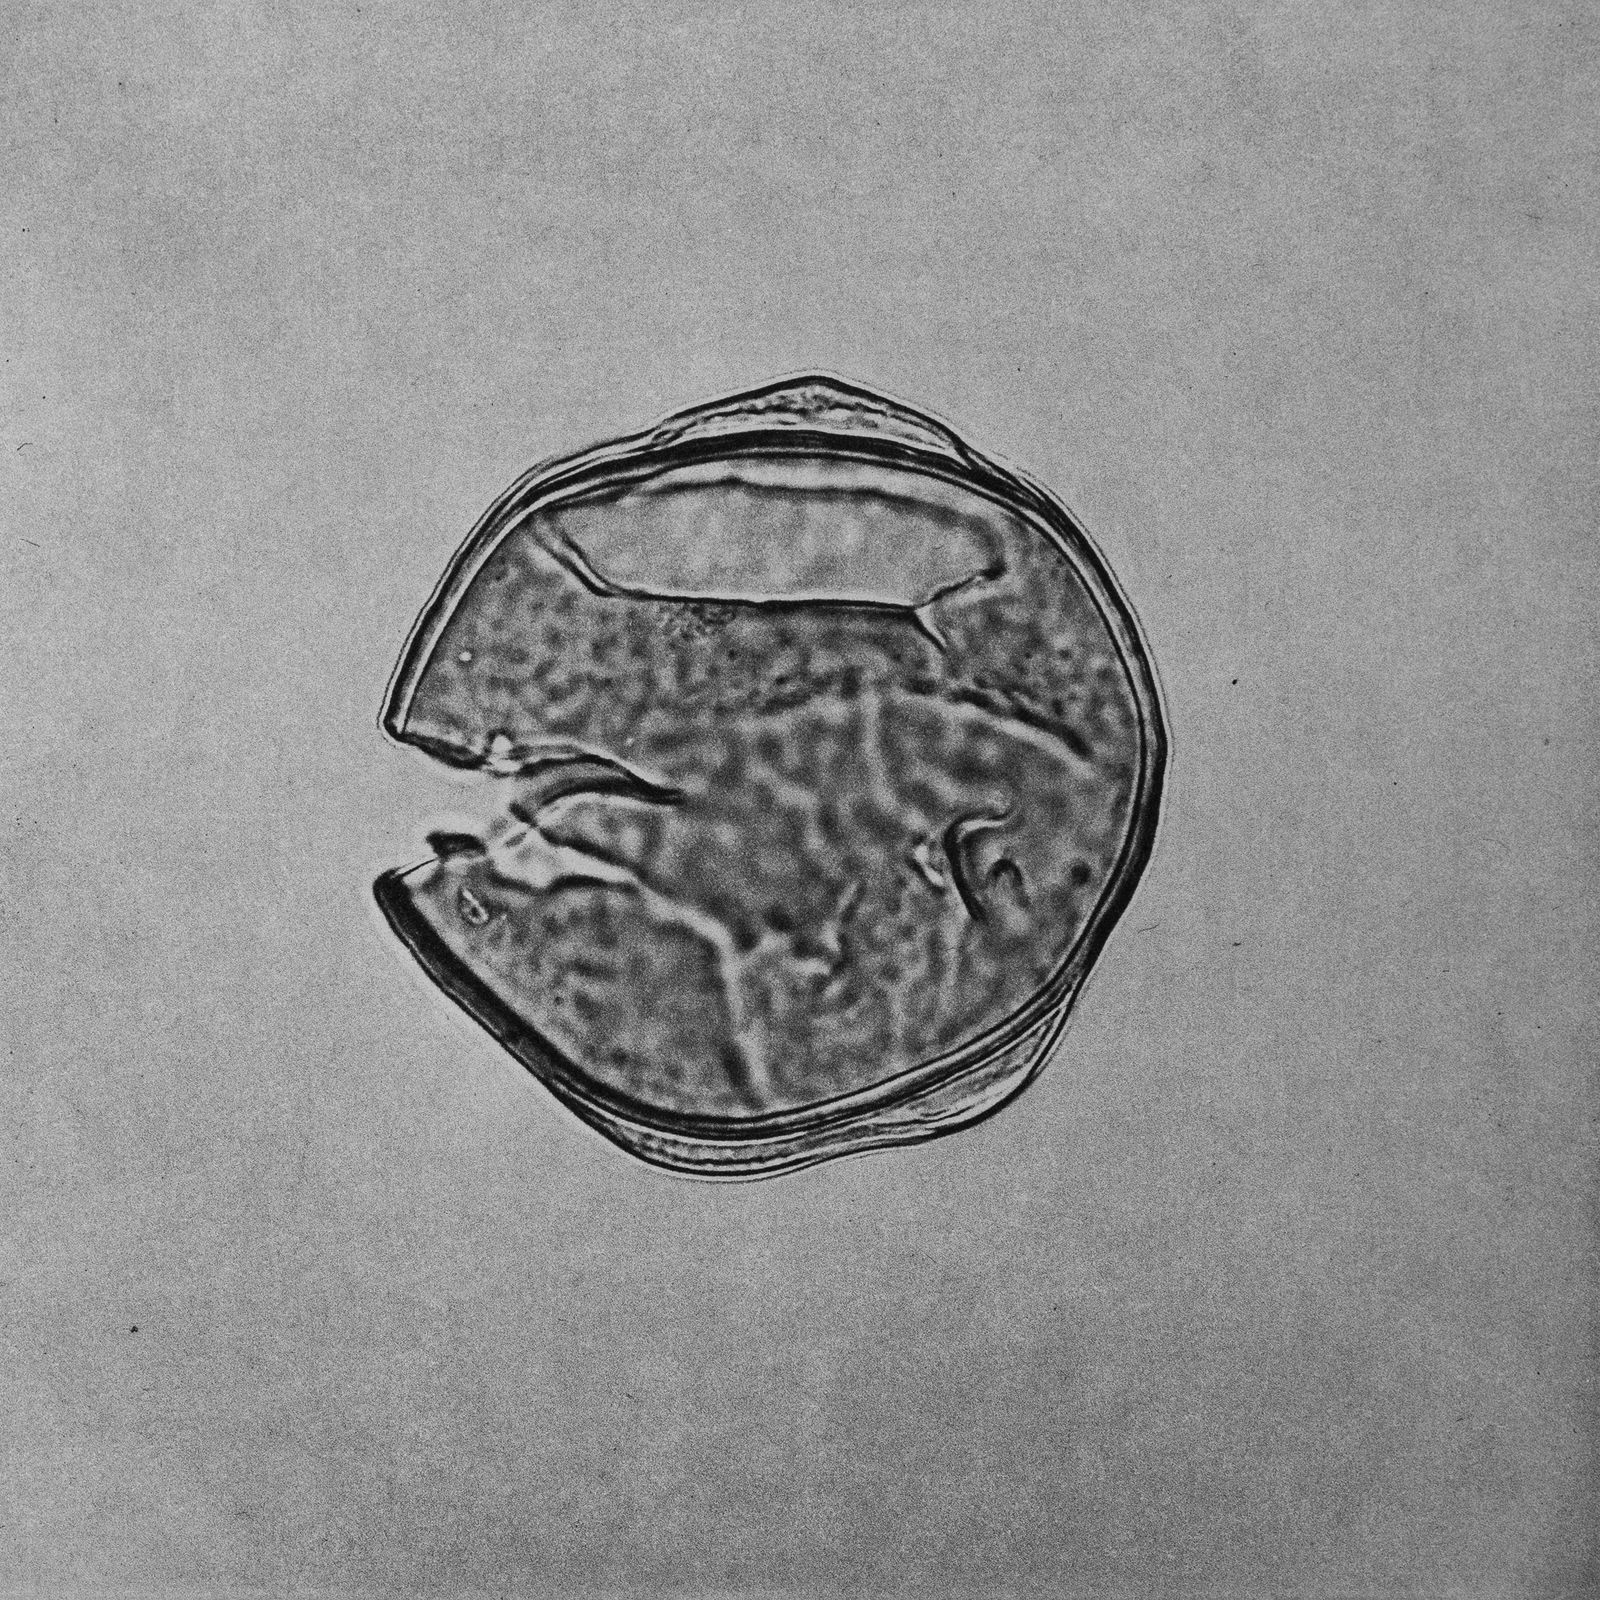 © suzette bousema - Deflandrea convexa From the project 'Dinoflagellates'